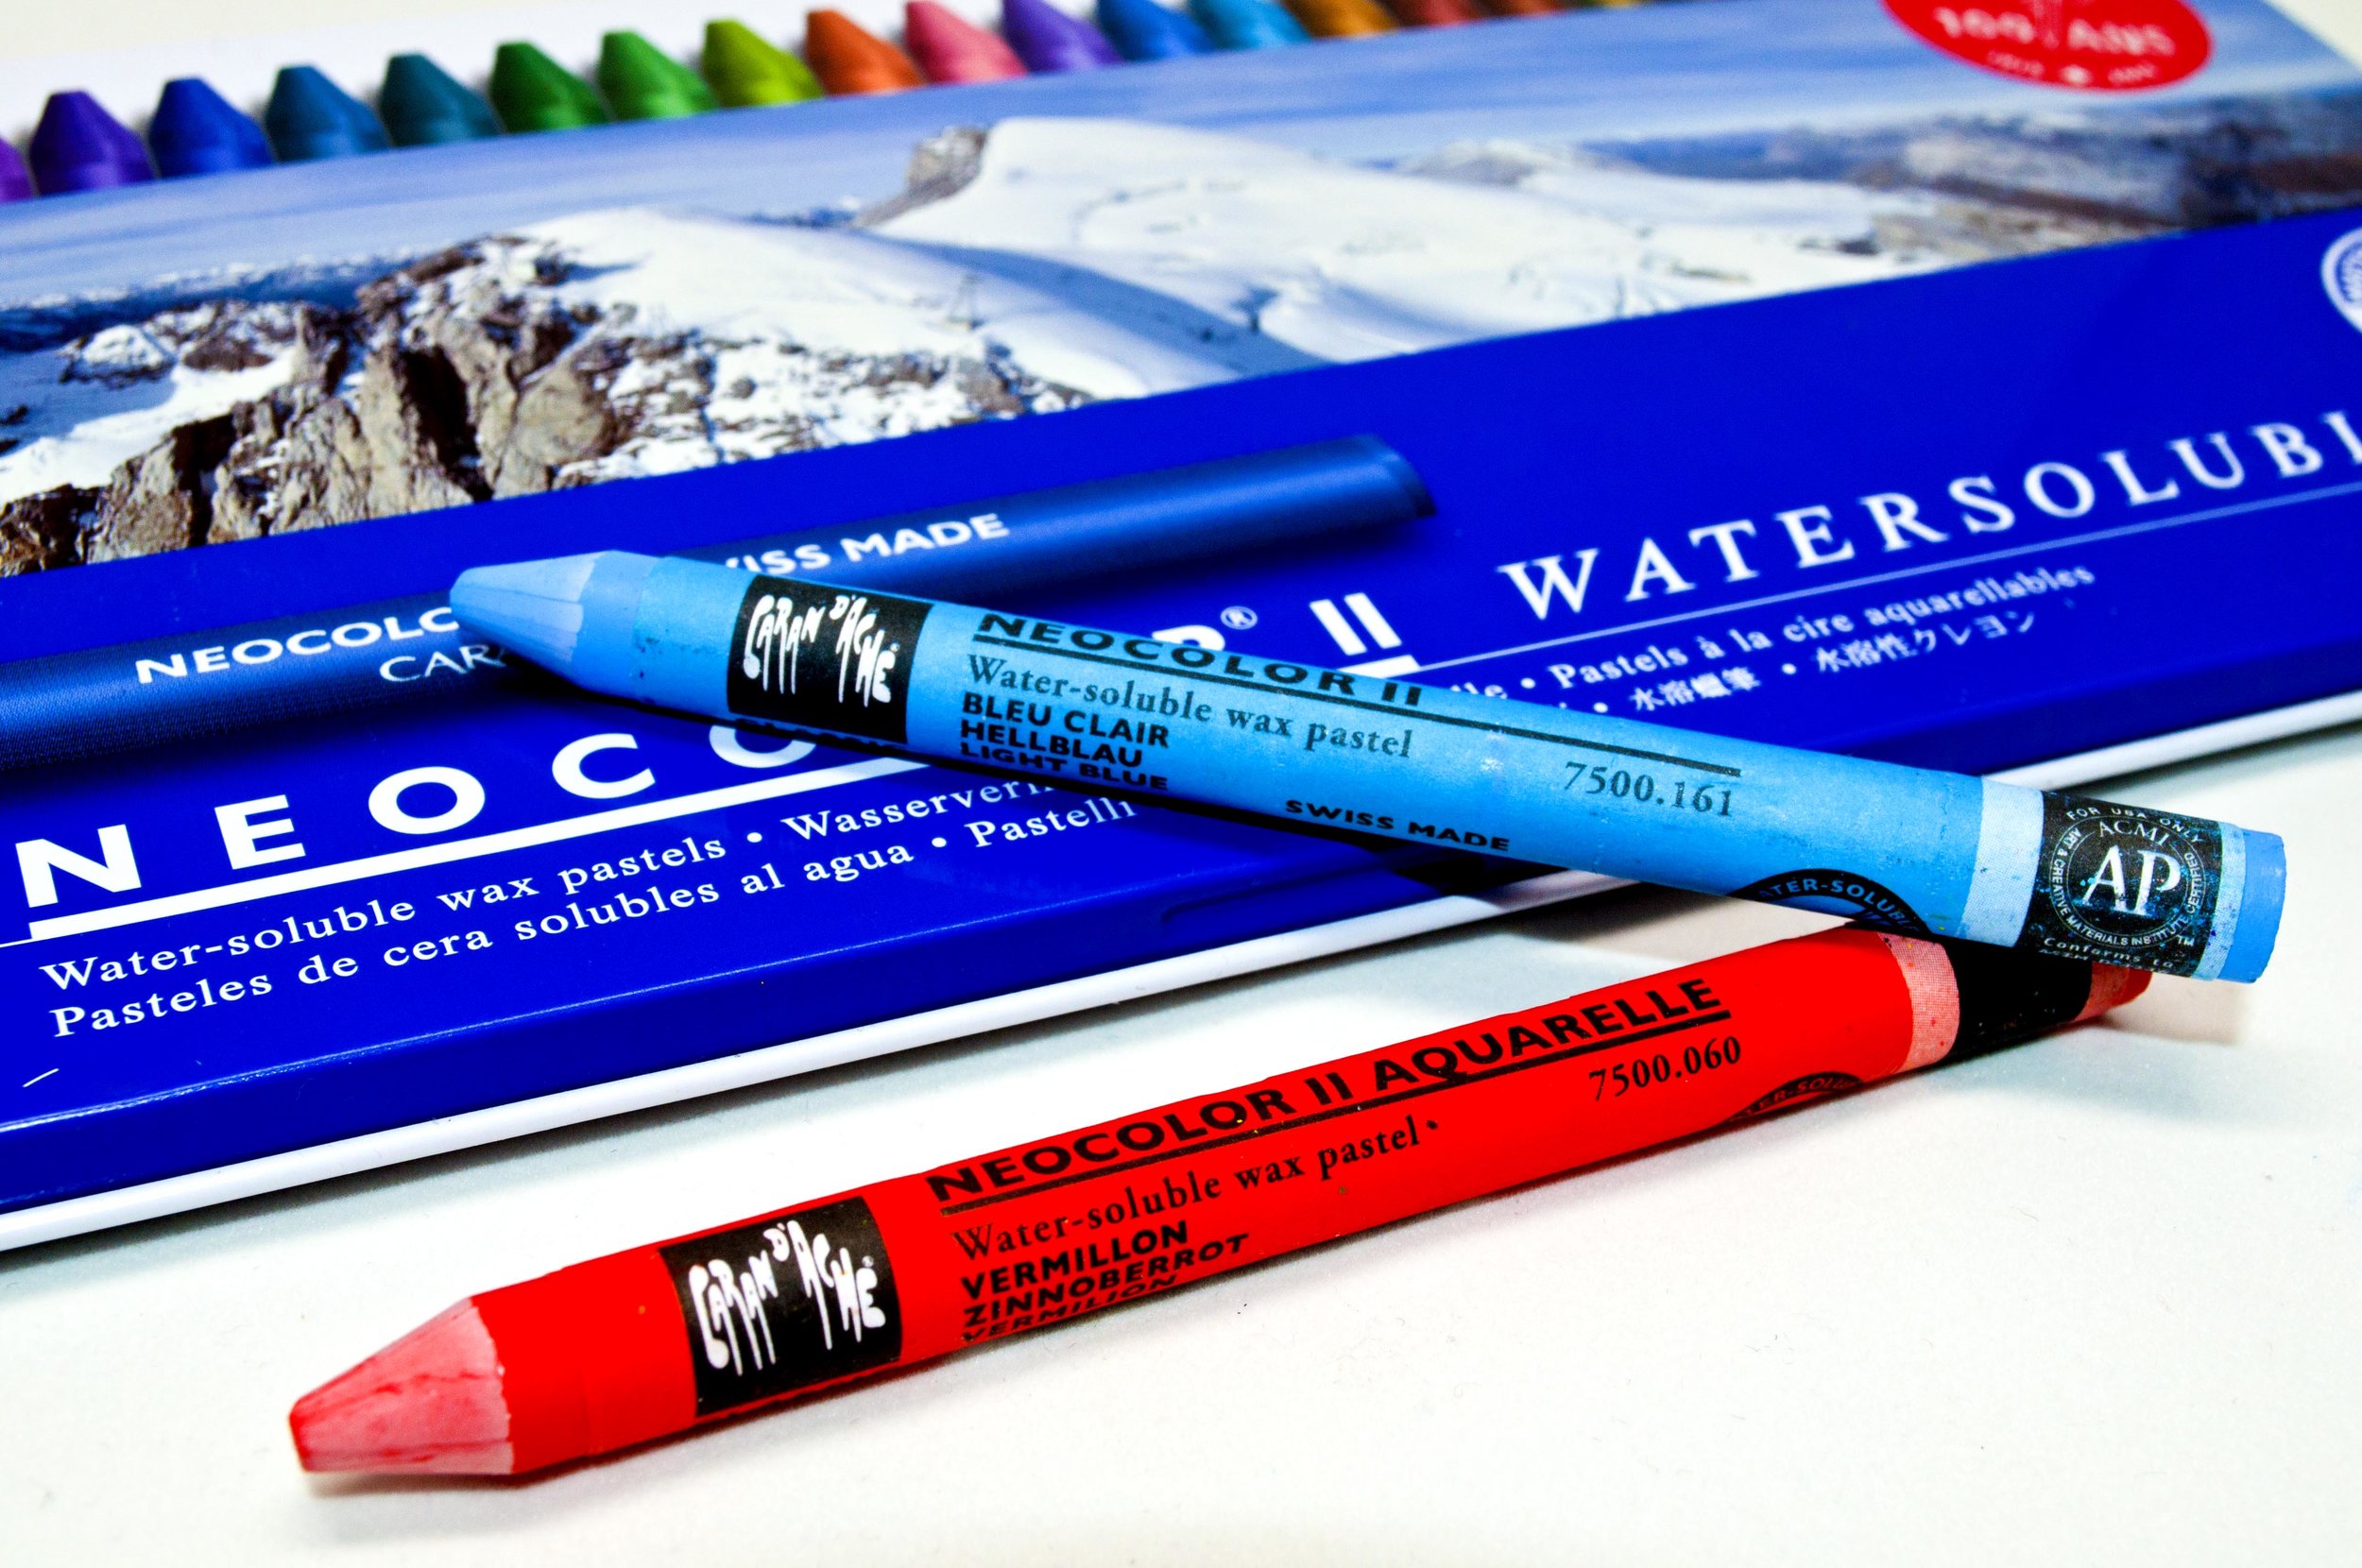 Caran d'Ache Neocolor II Water Soluble Wax Pastel 40 Set